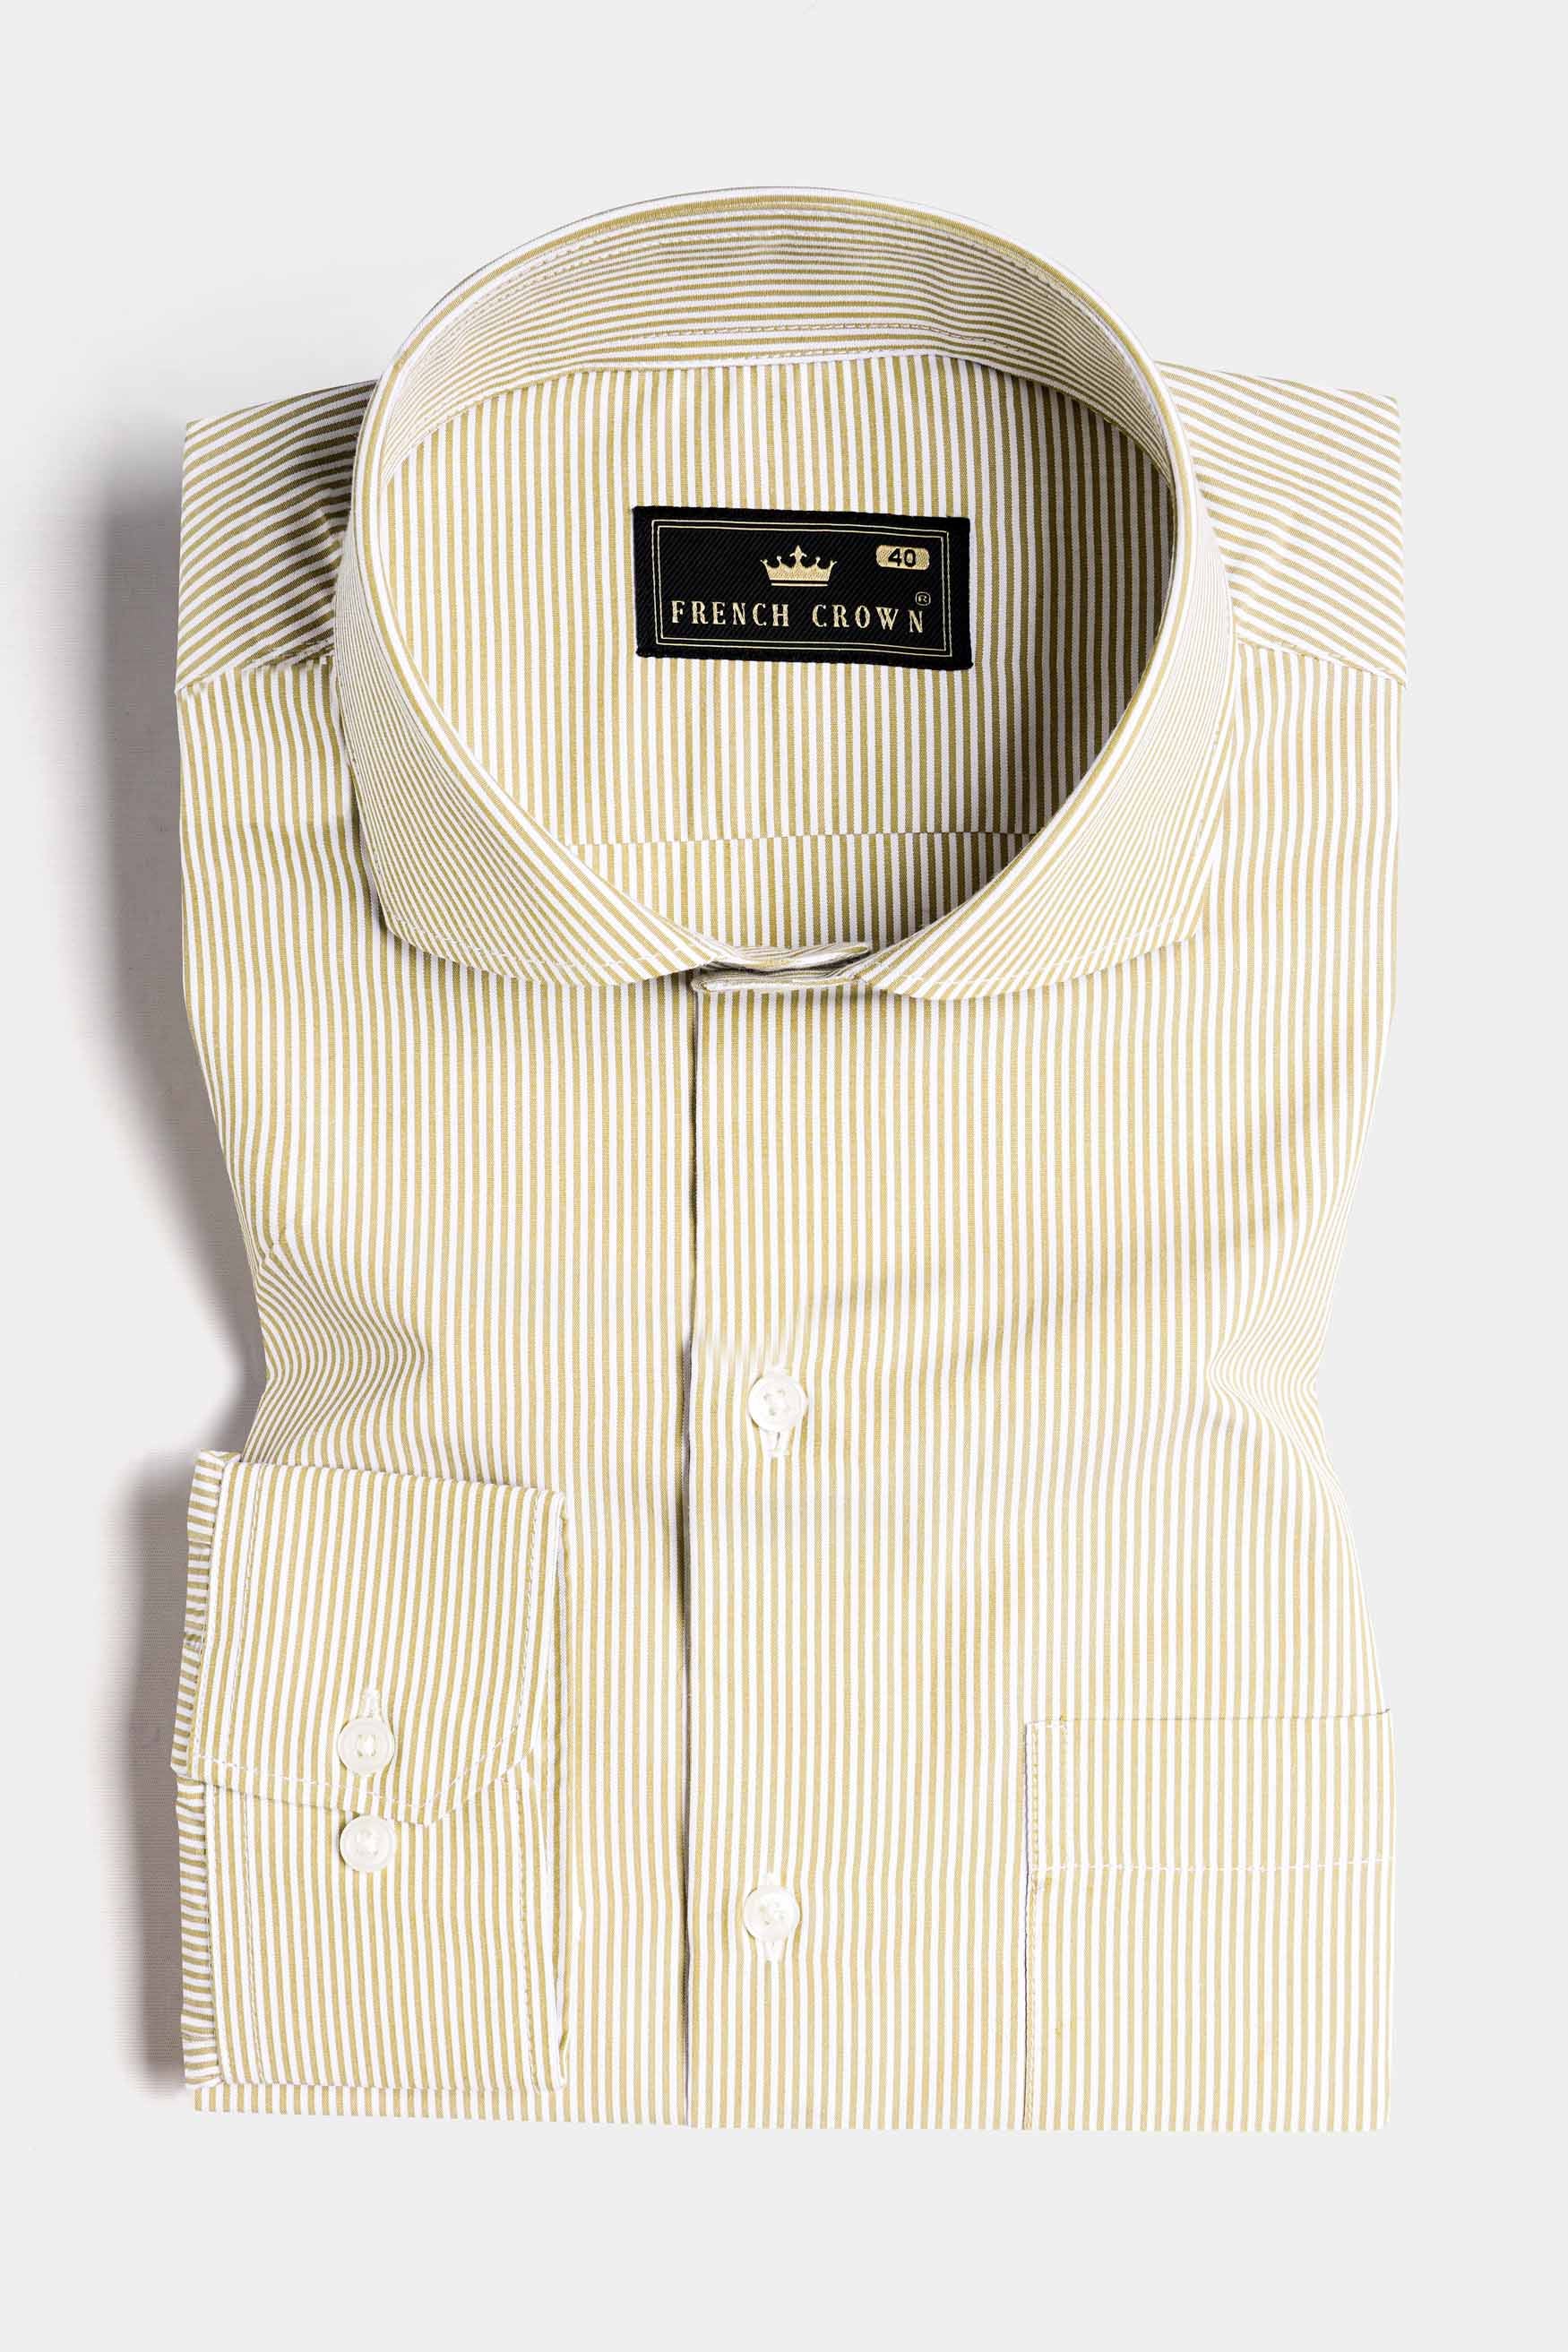 Desert Brown and White PinStriped Premium Cotton Shirt